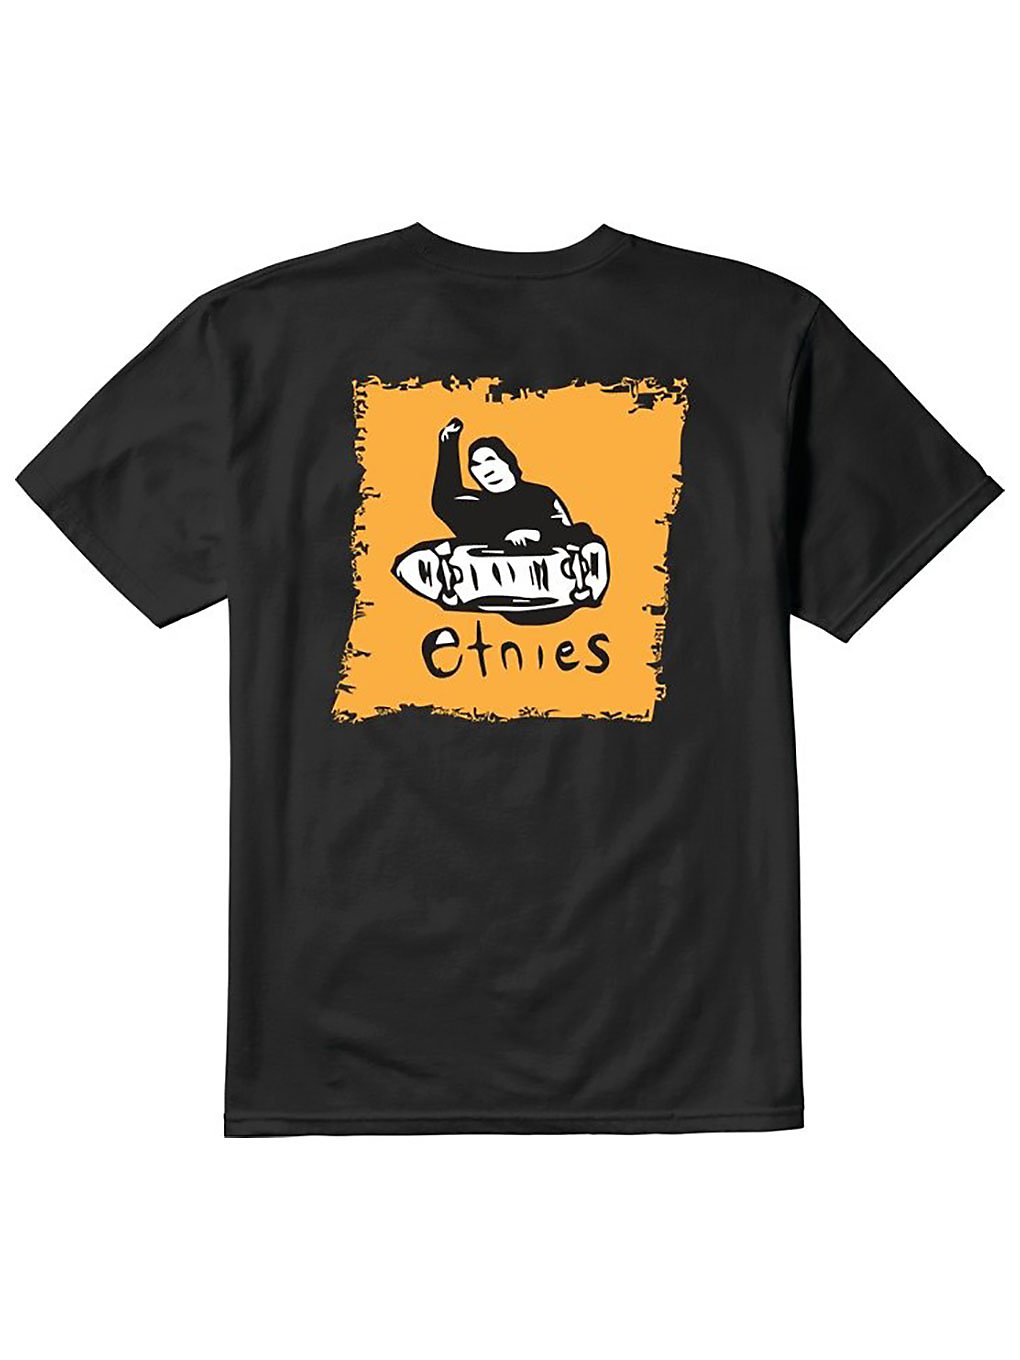 Etnies frontside t-shirt musta, etnies